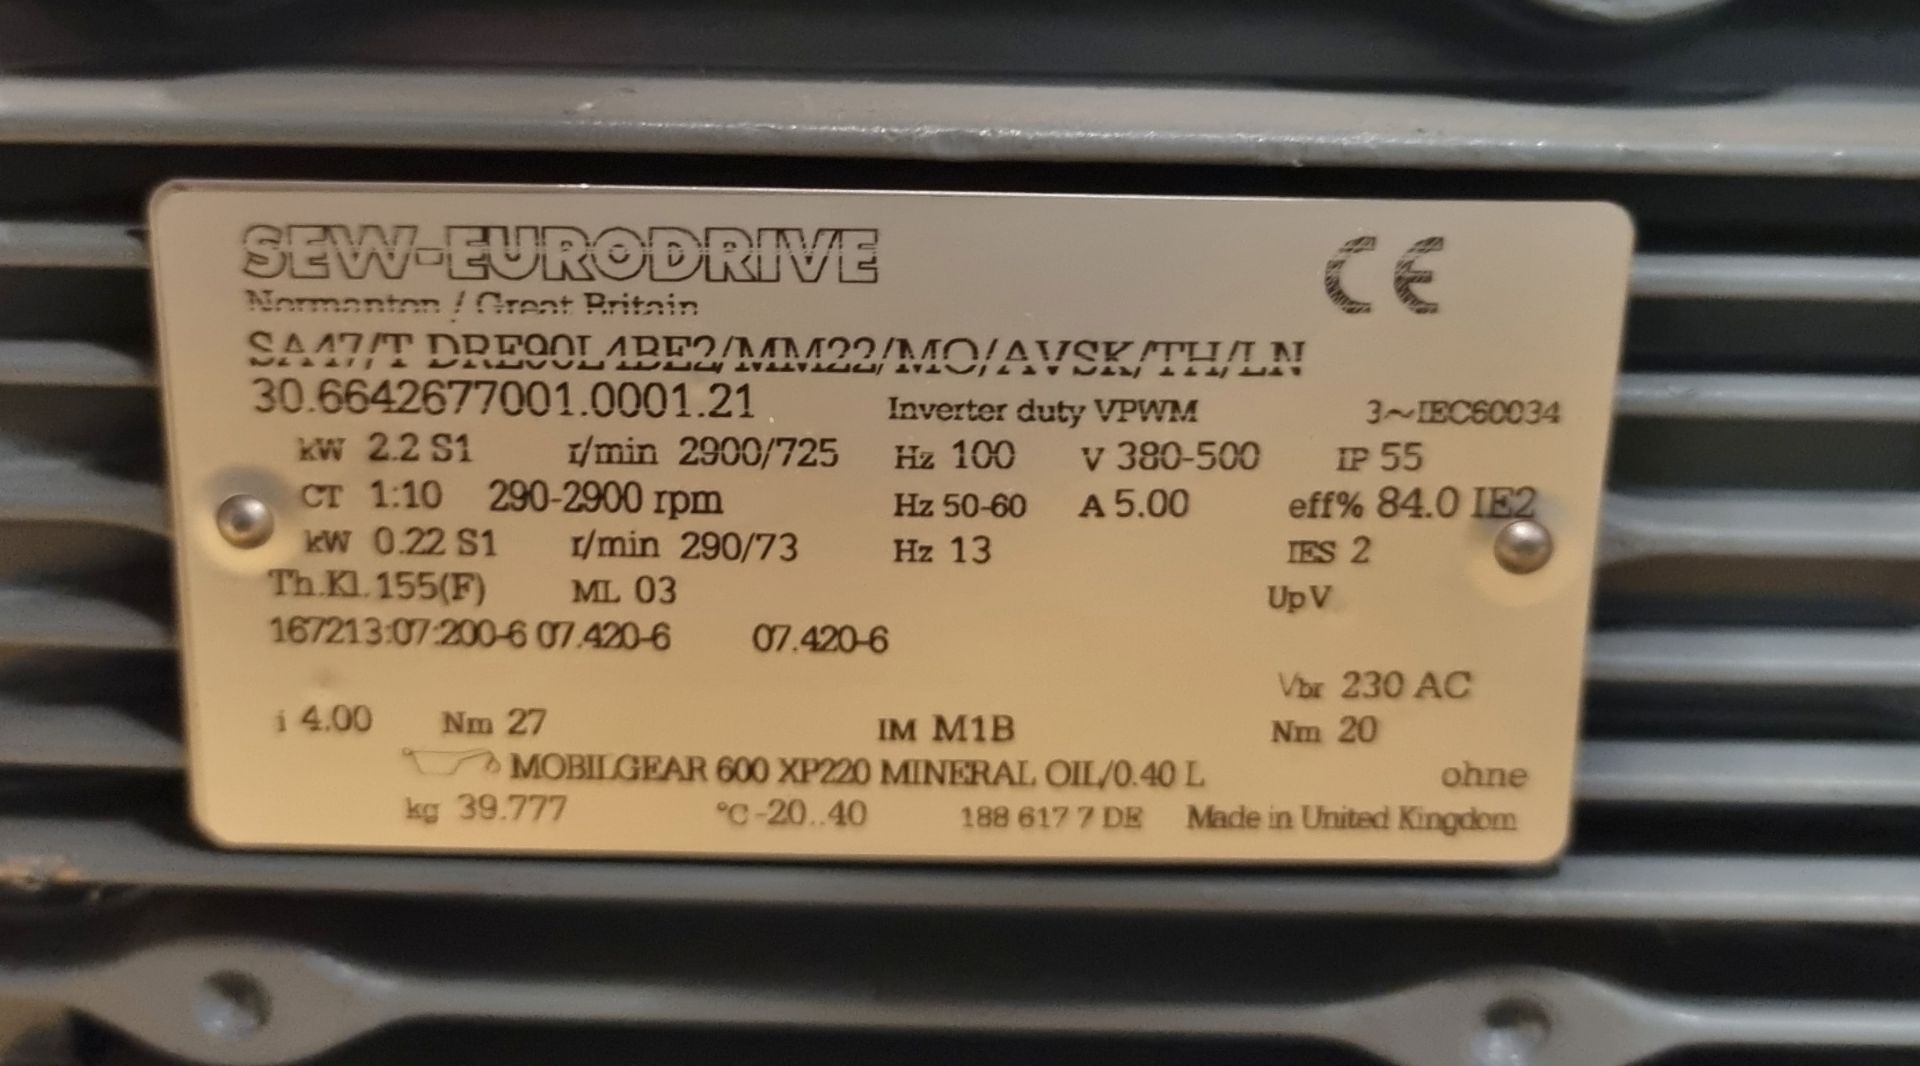 3x SEW-Eurodrive SA47/T DRE90L4/BE2/MM22/MO/AVSK/TH gear electric motors - 2900/725rpm - 2.2kW - Image 6 of 8